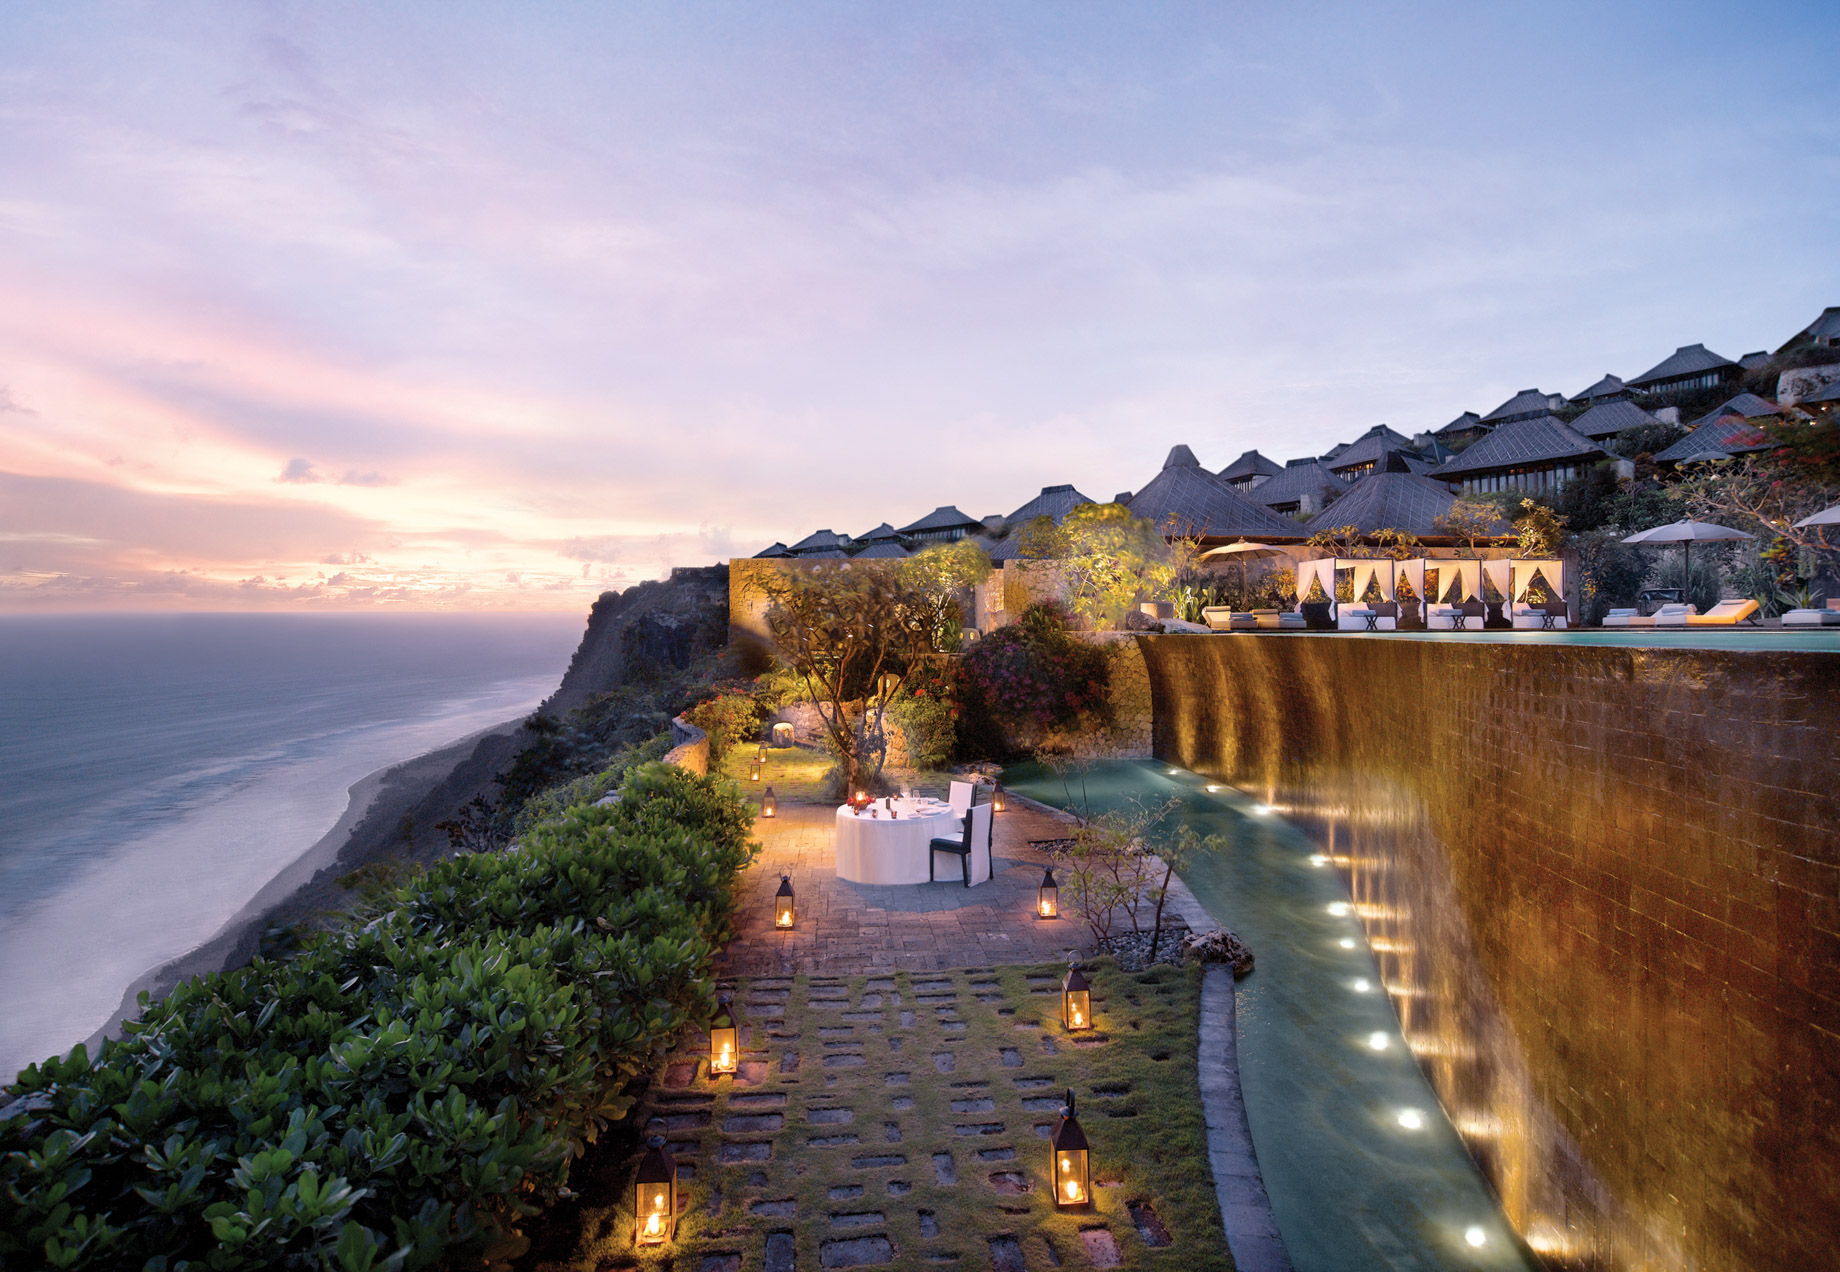 Bvlgari Resort Bali - Uluwatu, Bali, Indonesia - Lower Pool Cliff Ocean View Sunset